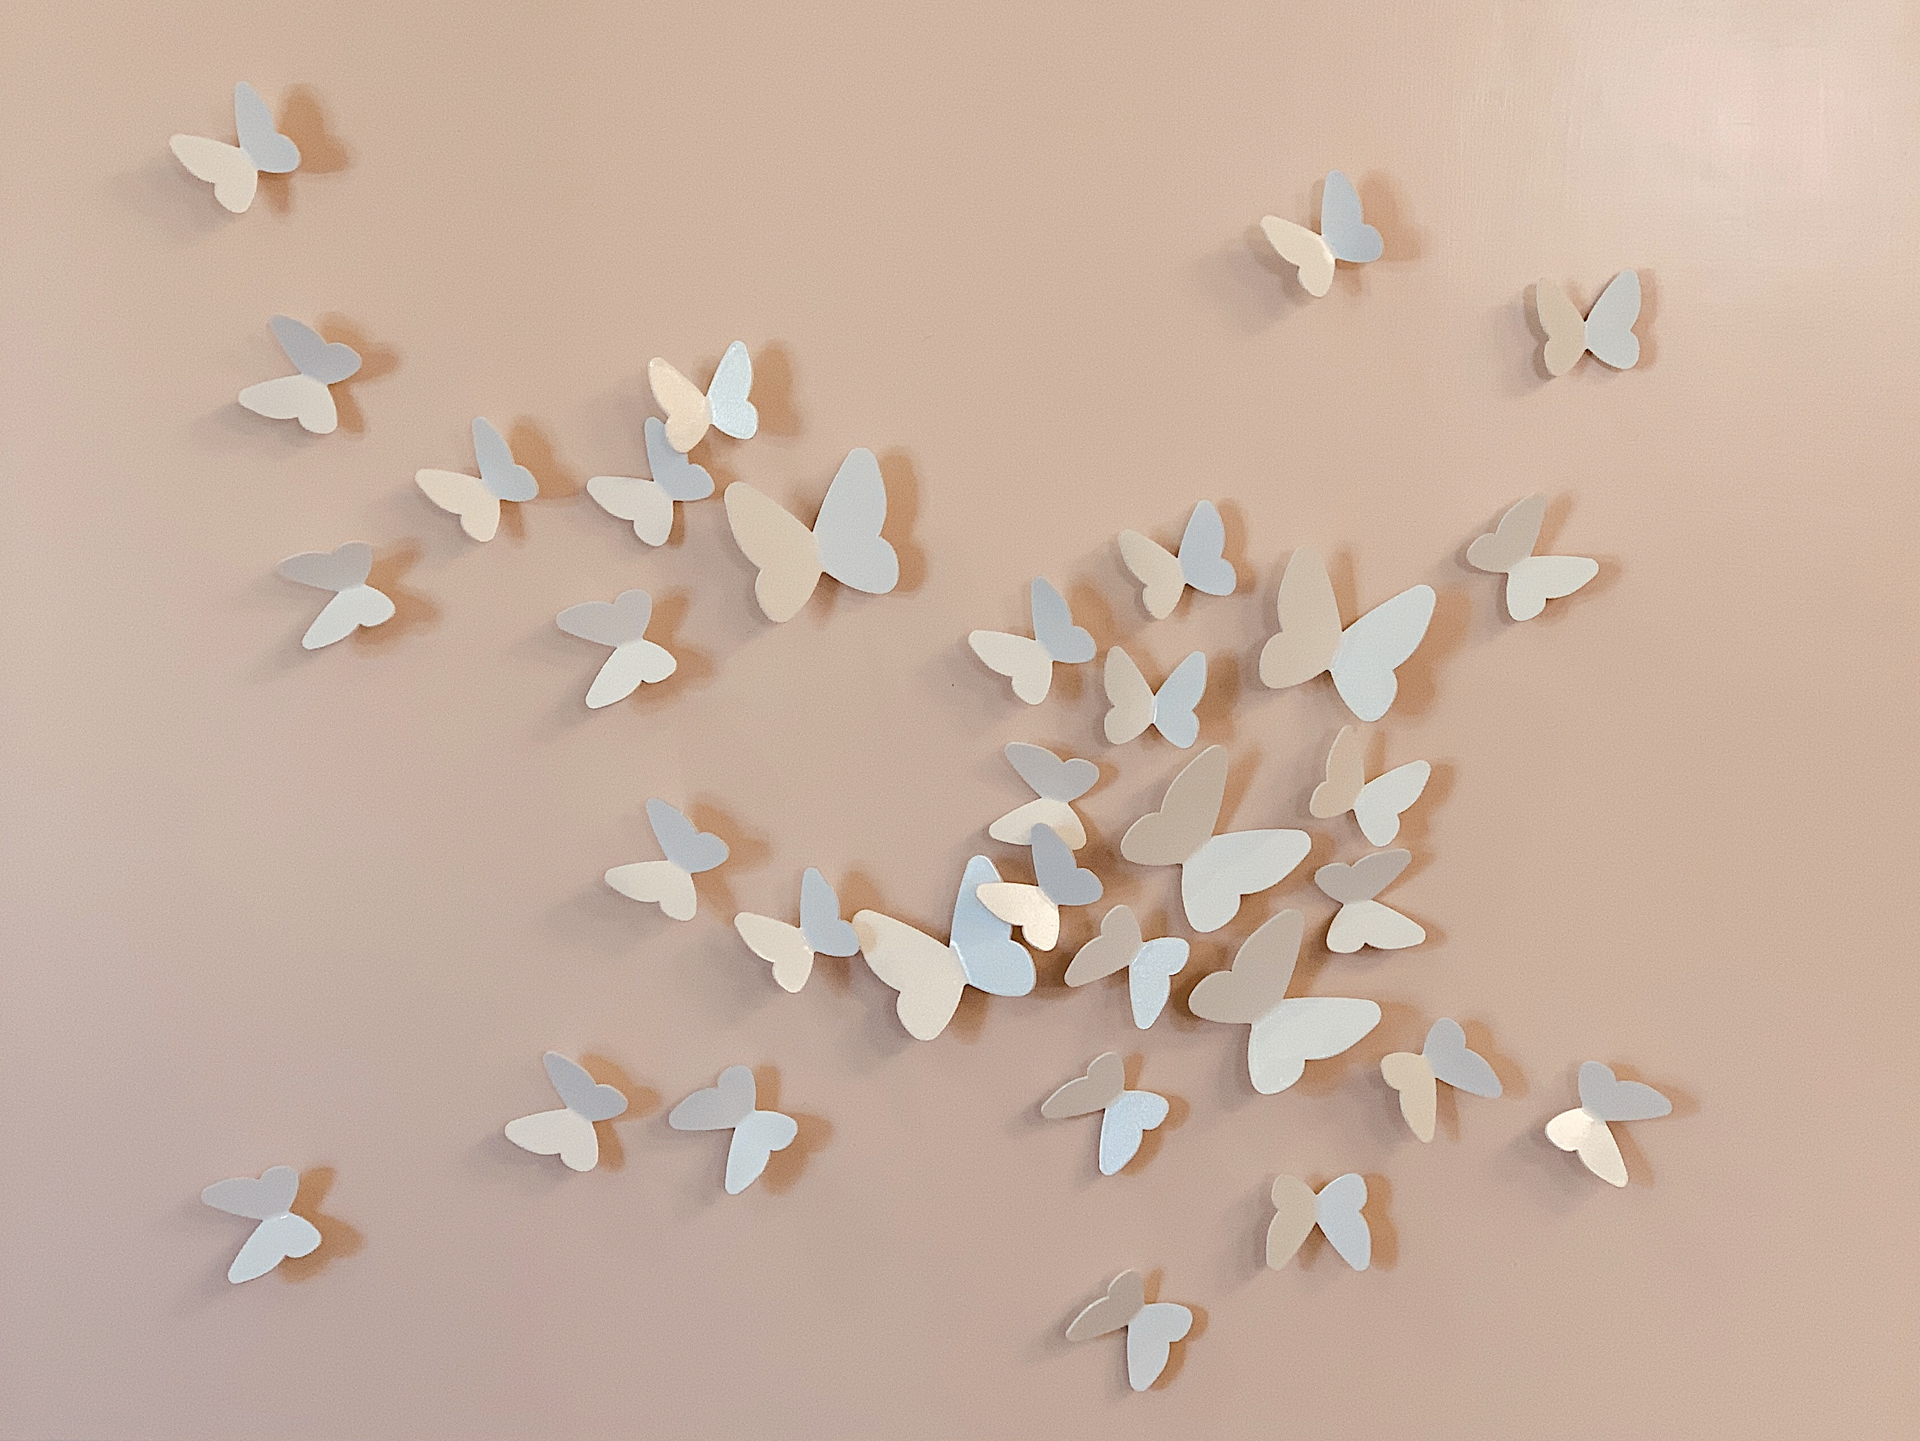 Butterflies in White on Blush P by Kristen Cassavechia